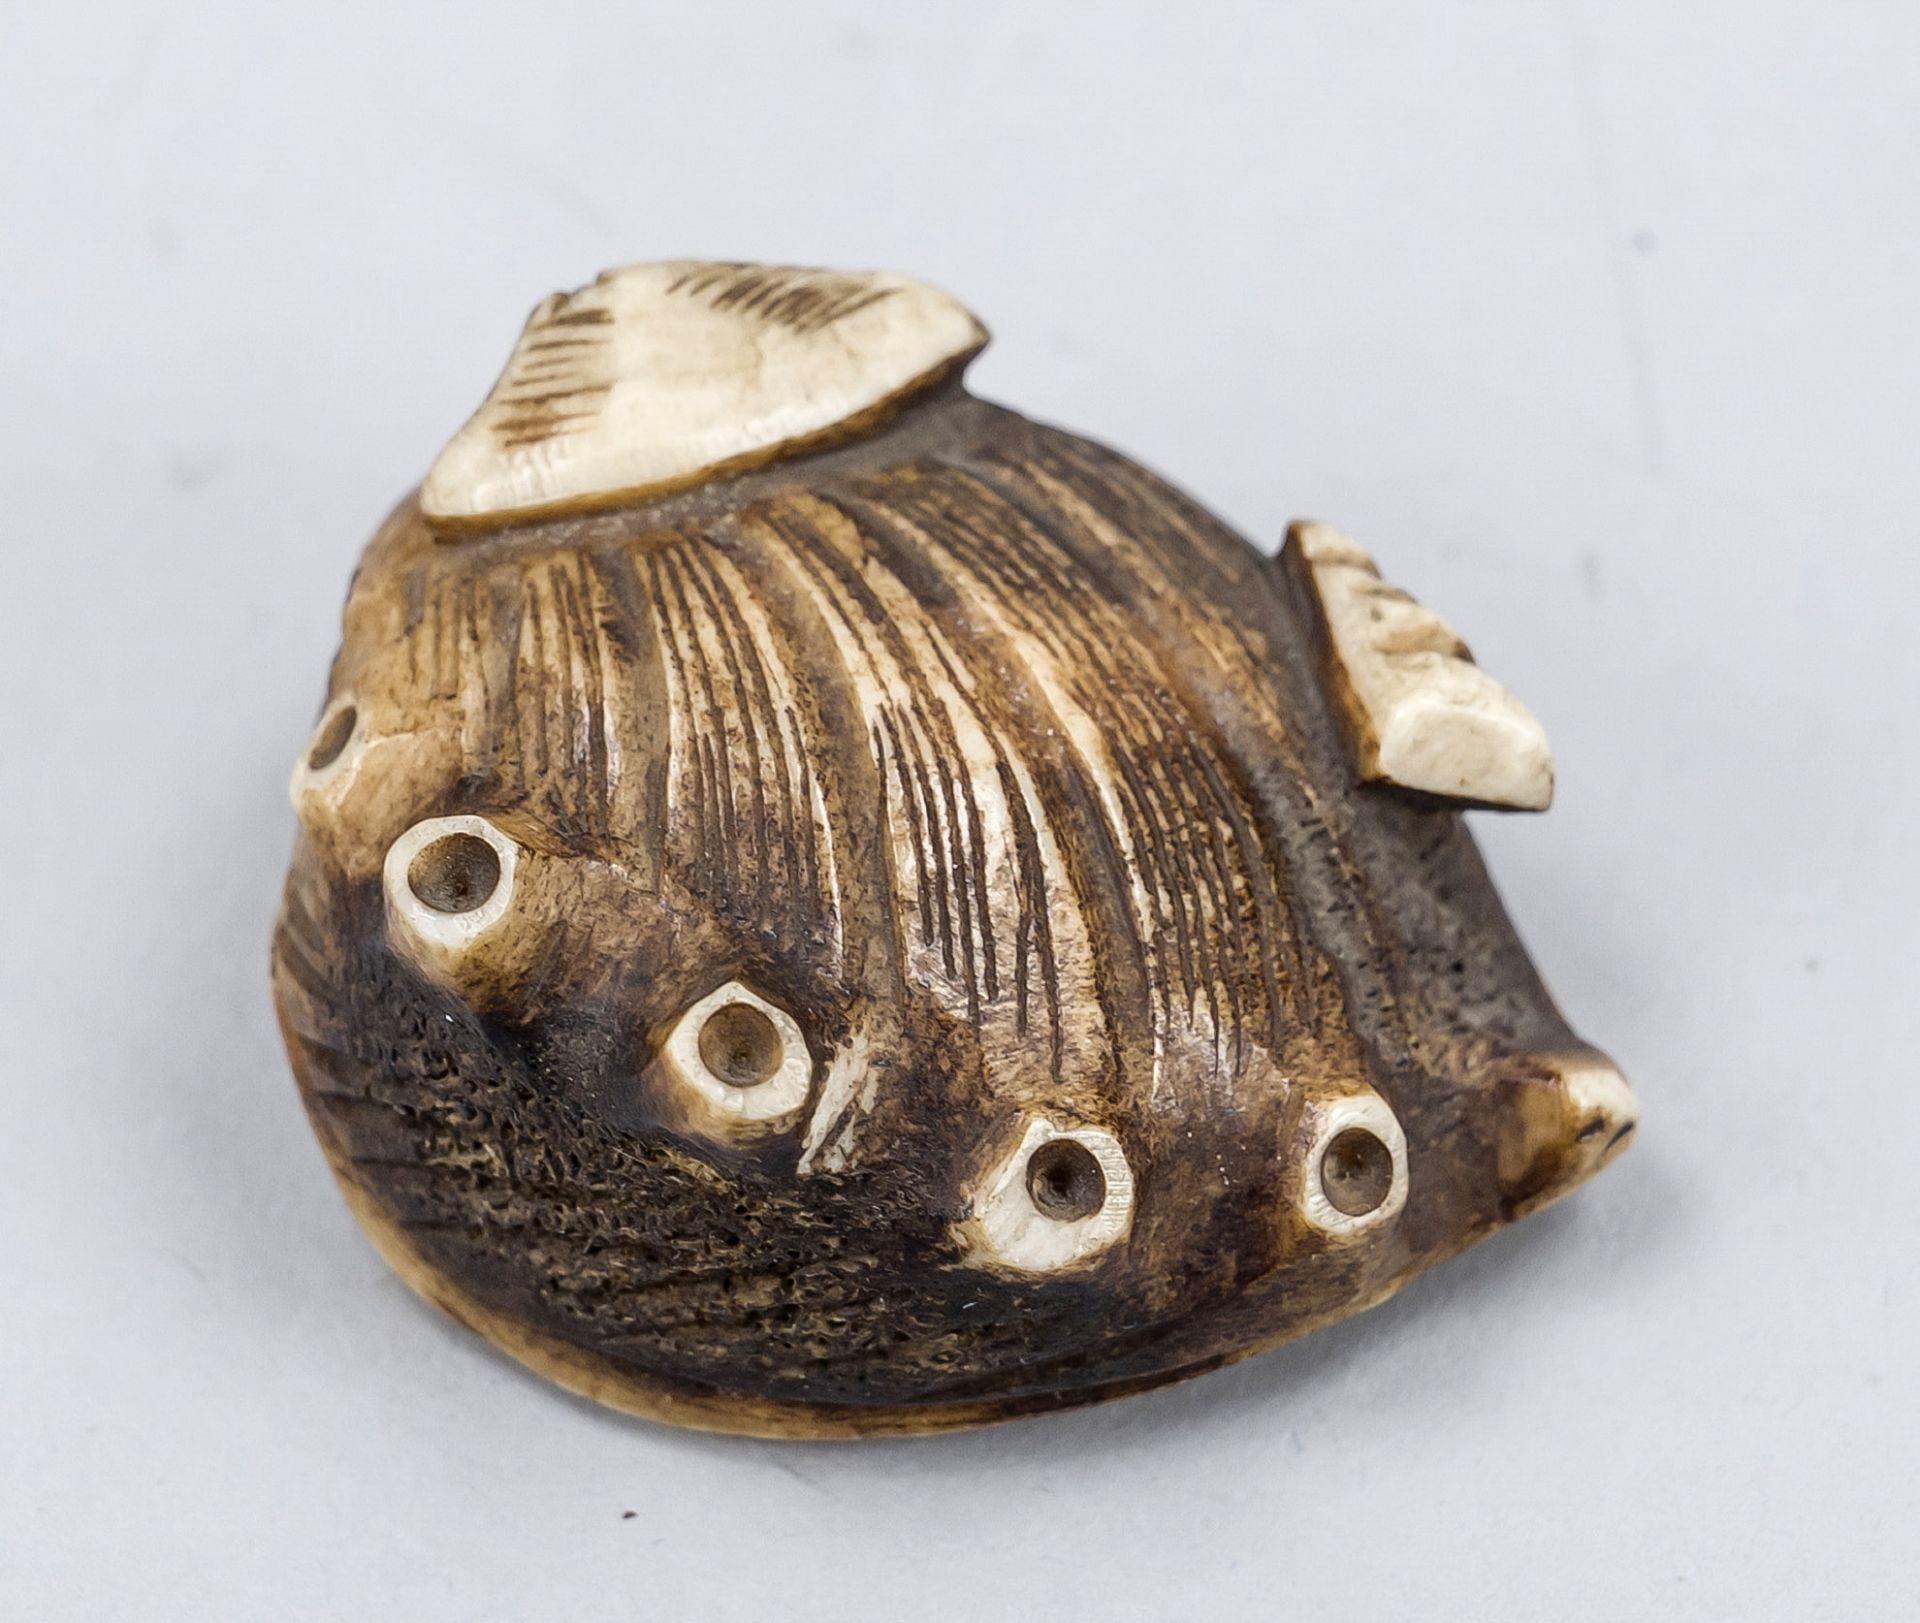 Netsuke in the shape of a shell (Awami), Japan 19th century (Meiji), bone, signed, d. 4 cm